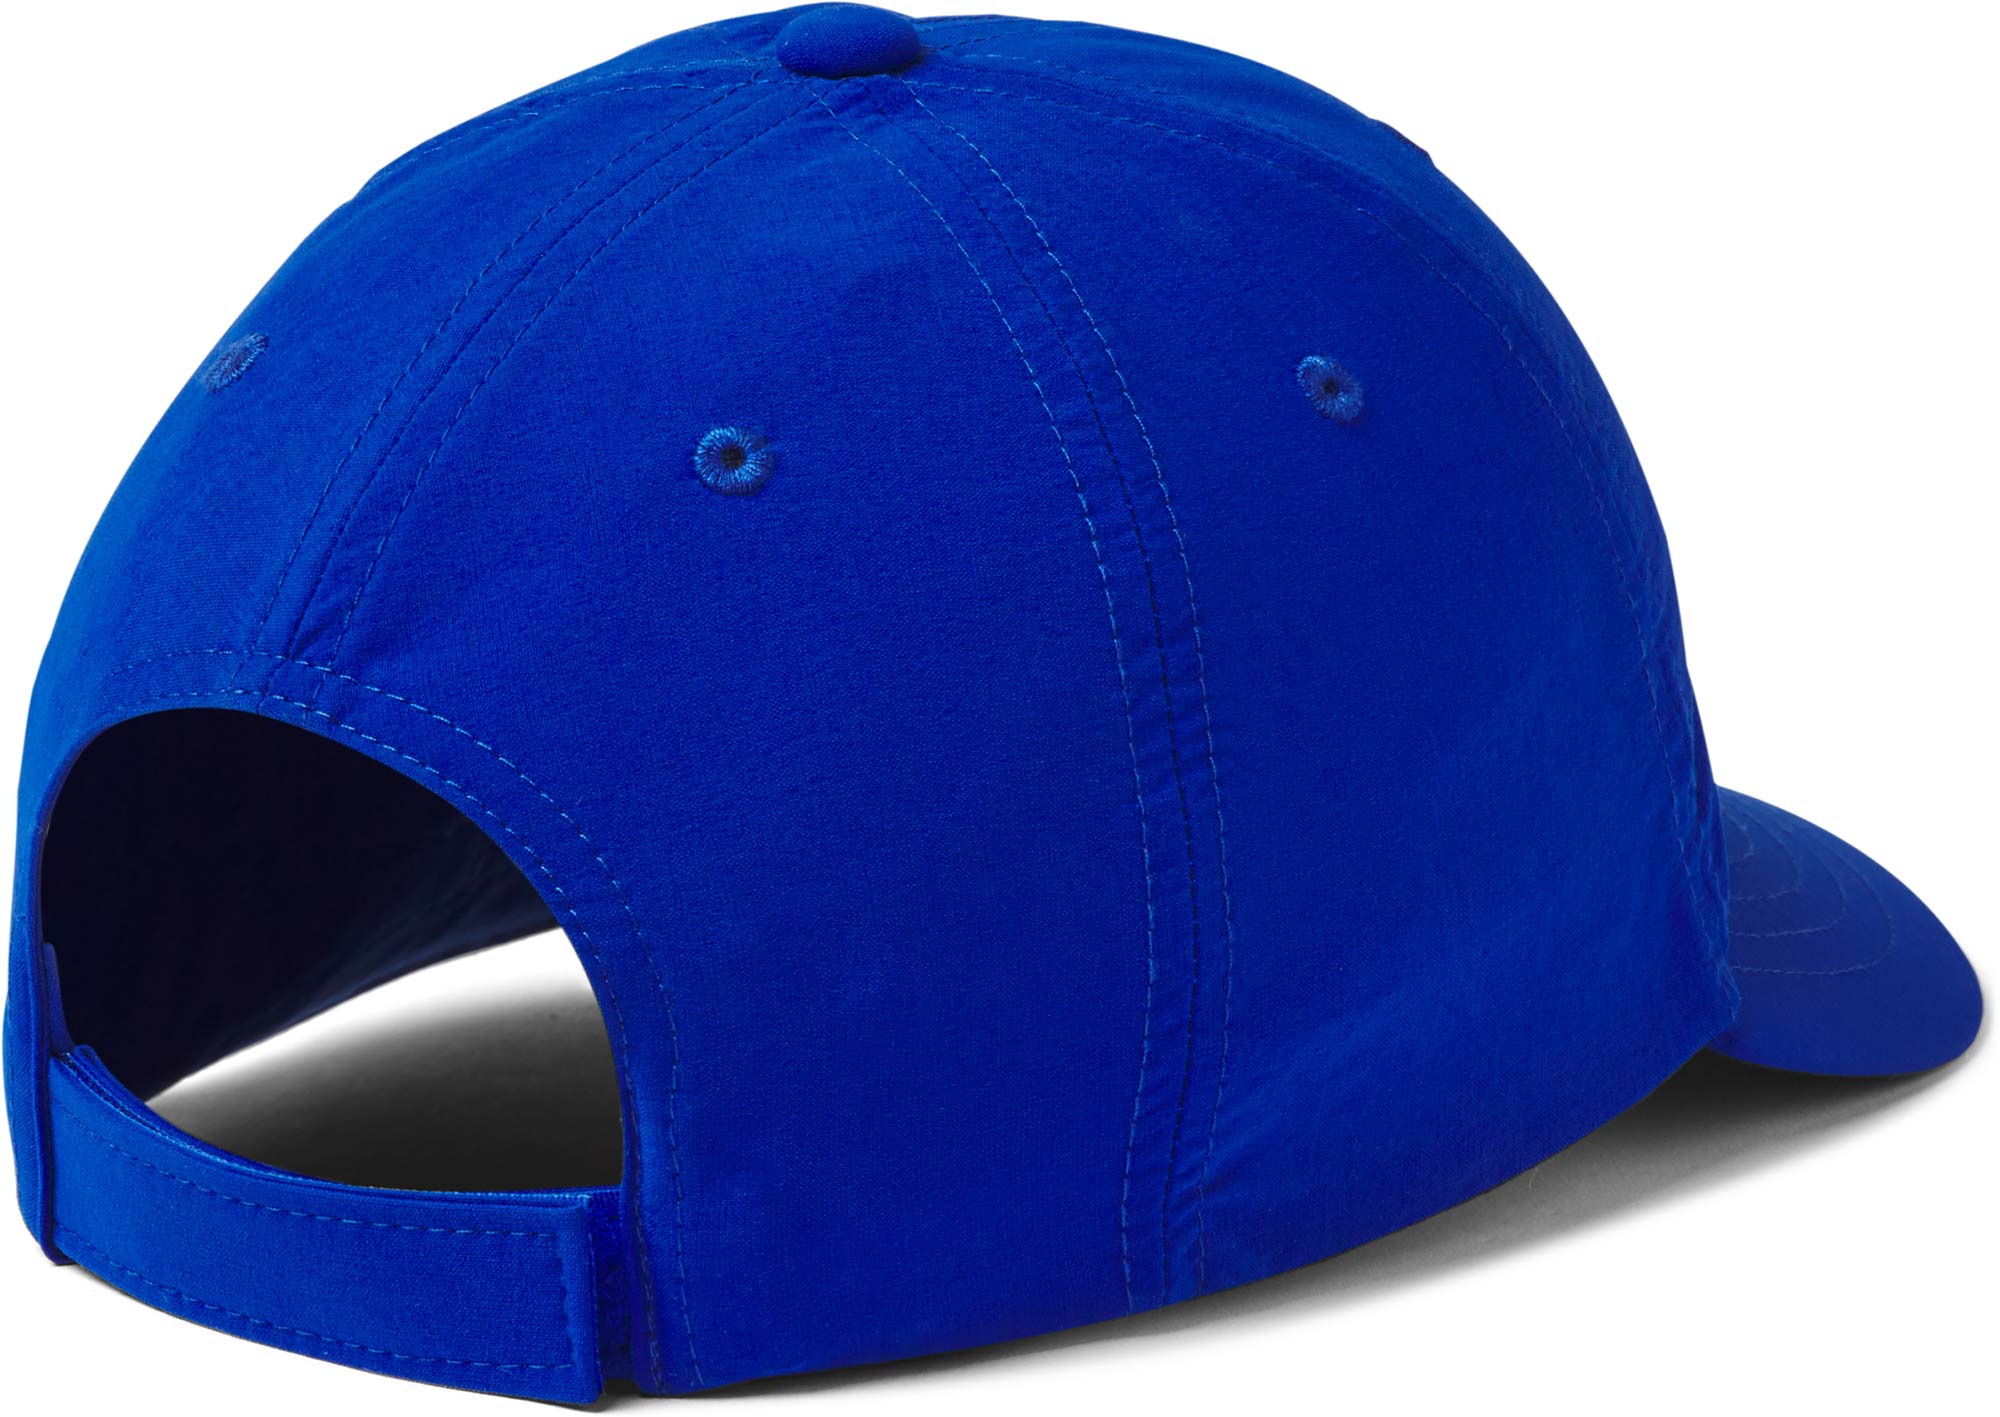 Kids' baseball cap